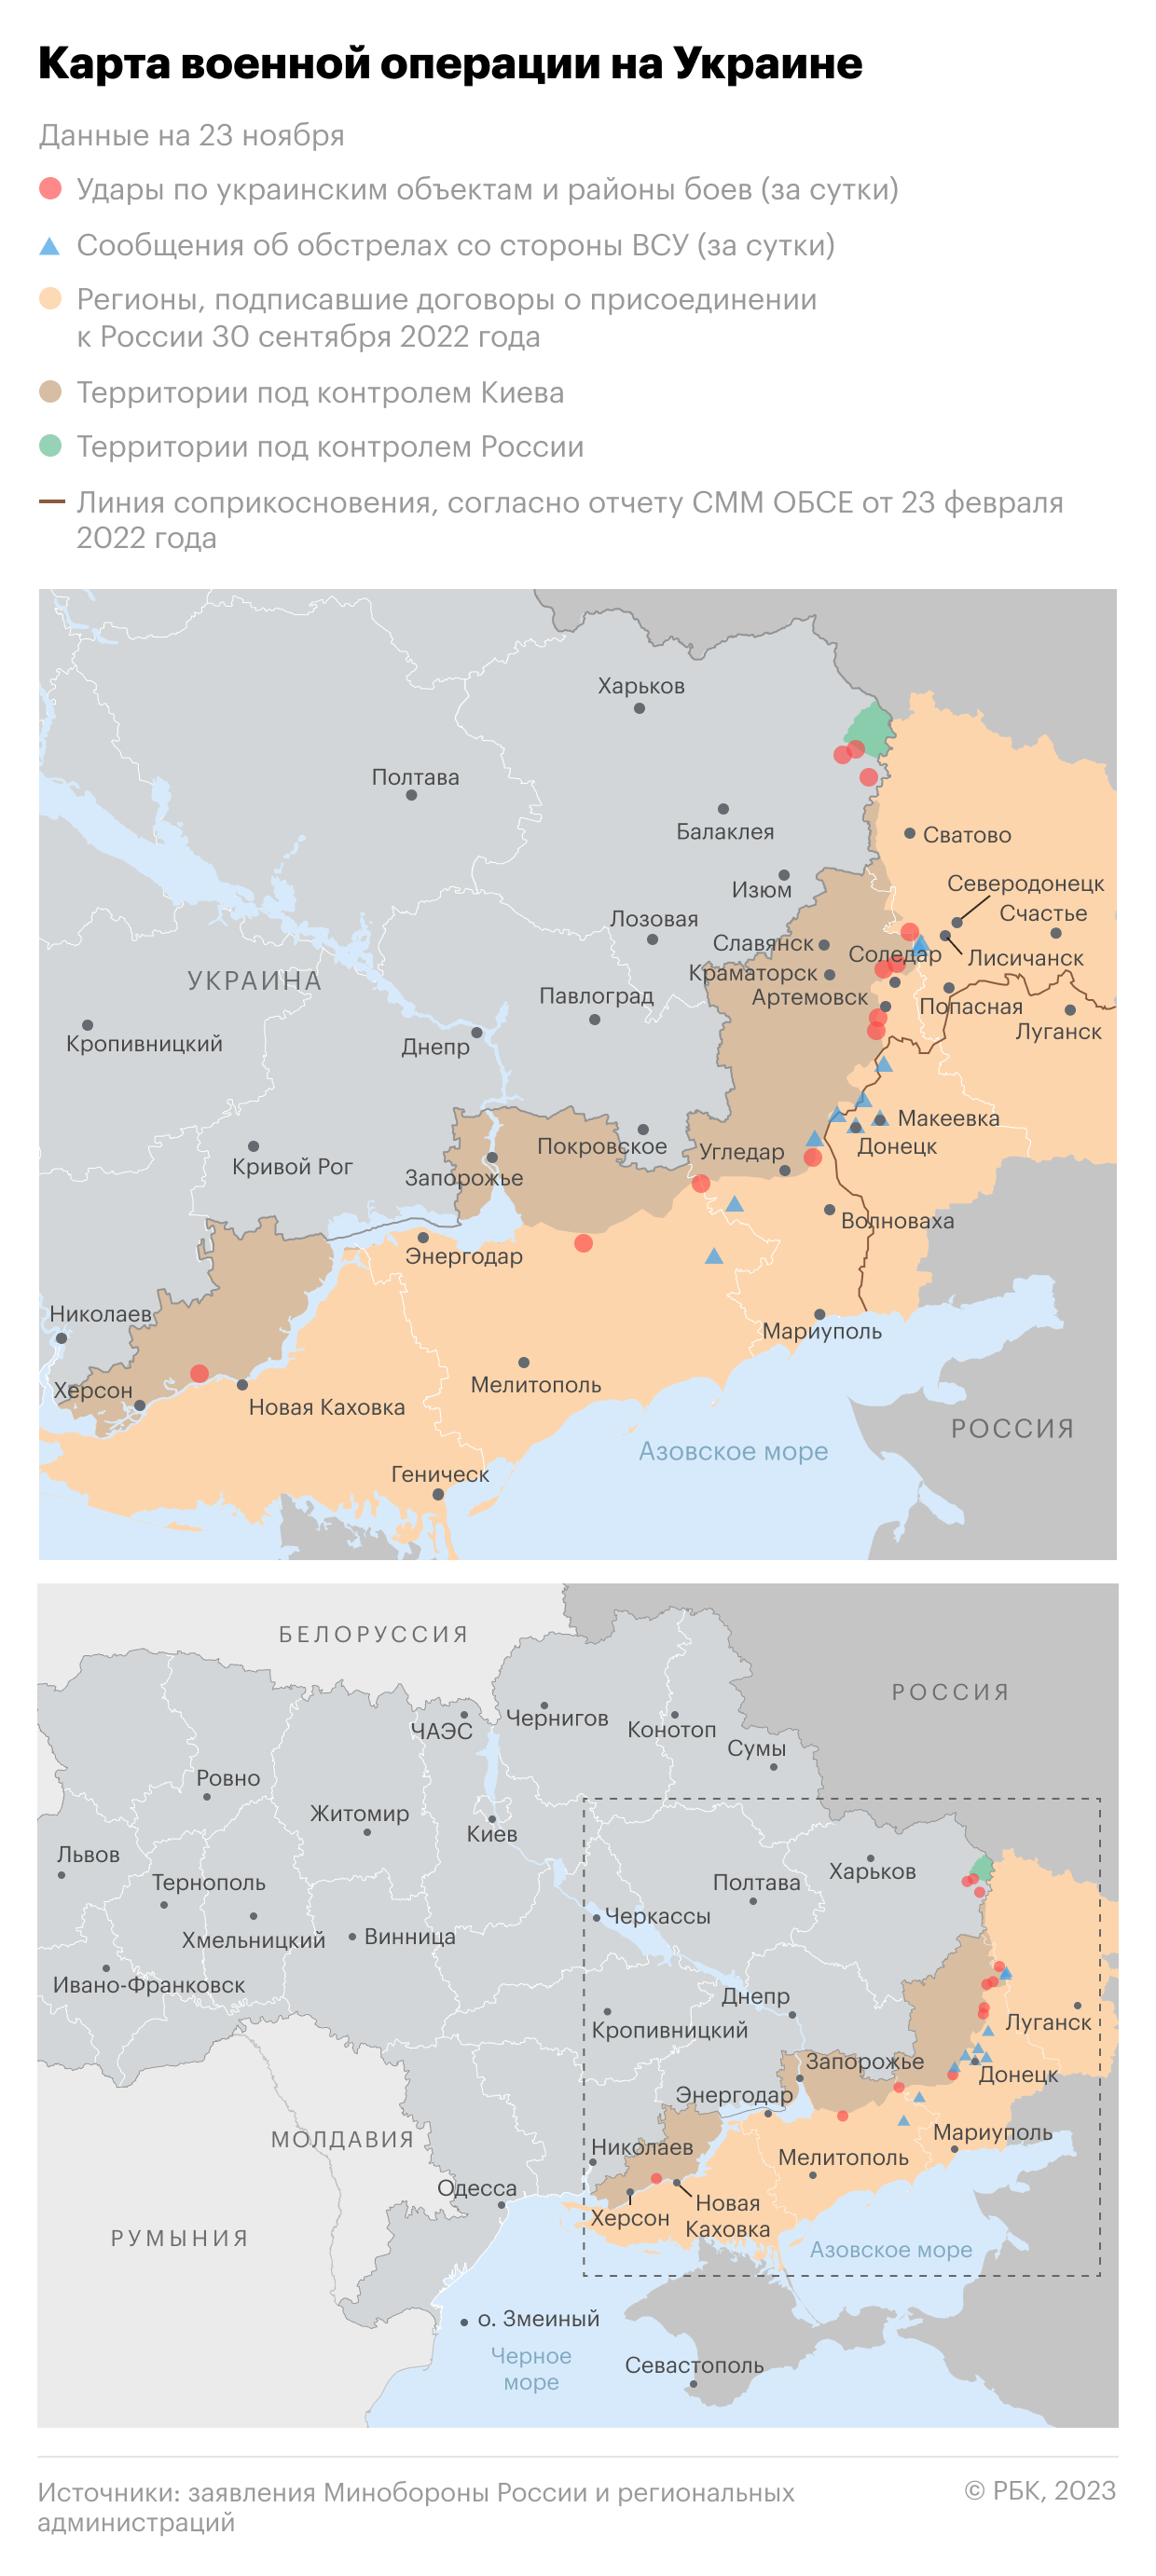 Карта завоеваний на украине на сегодня